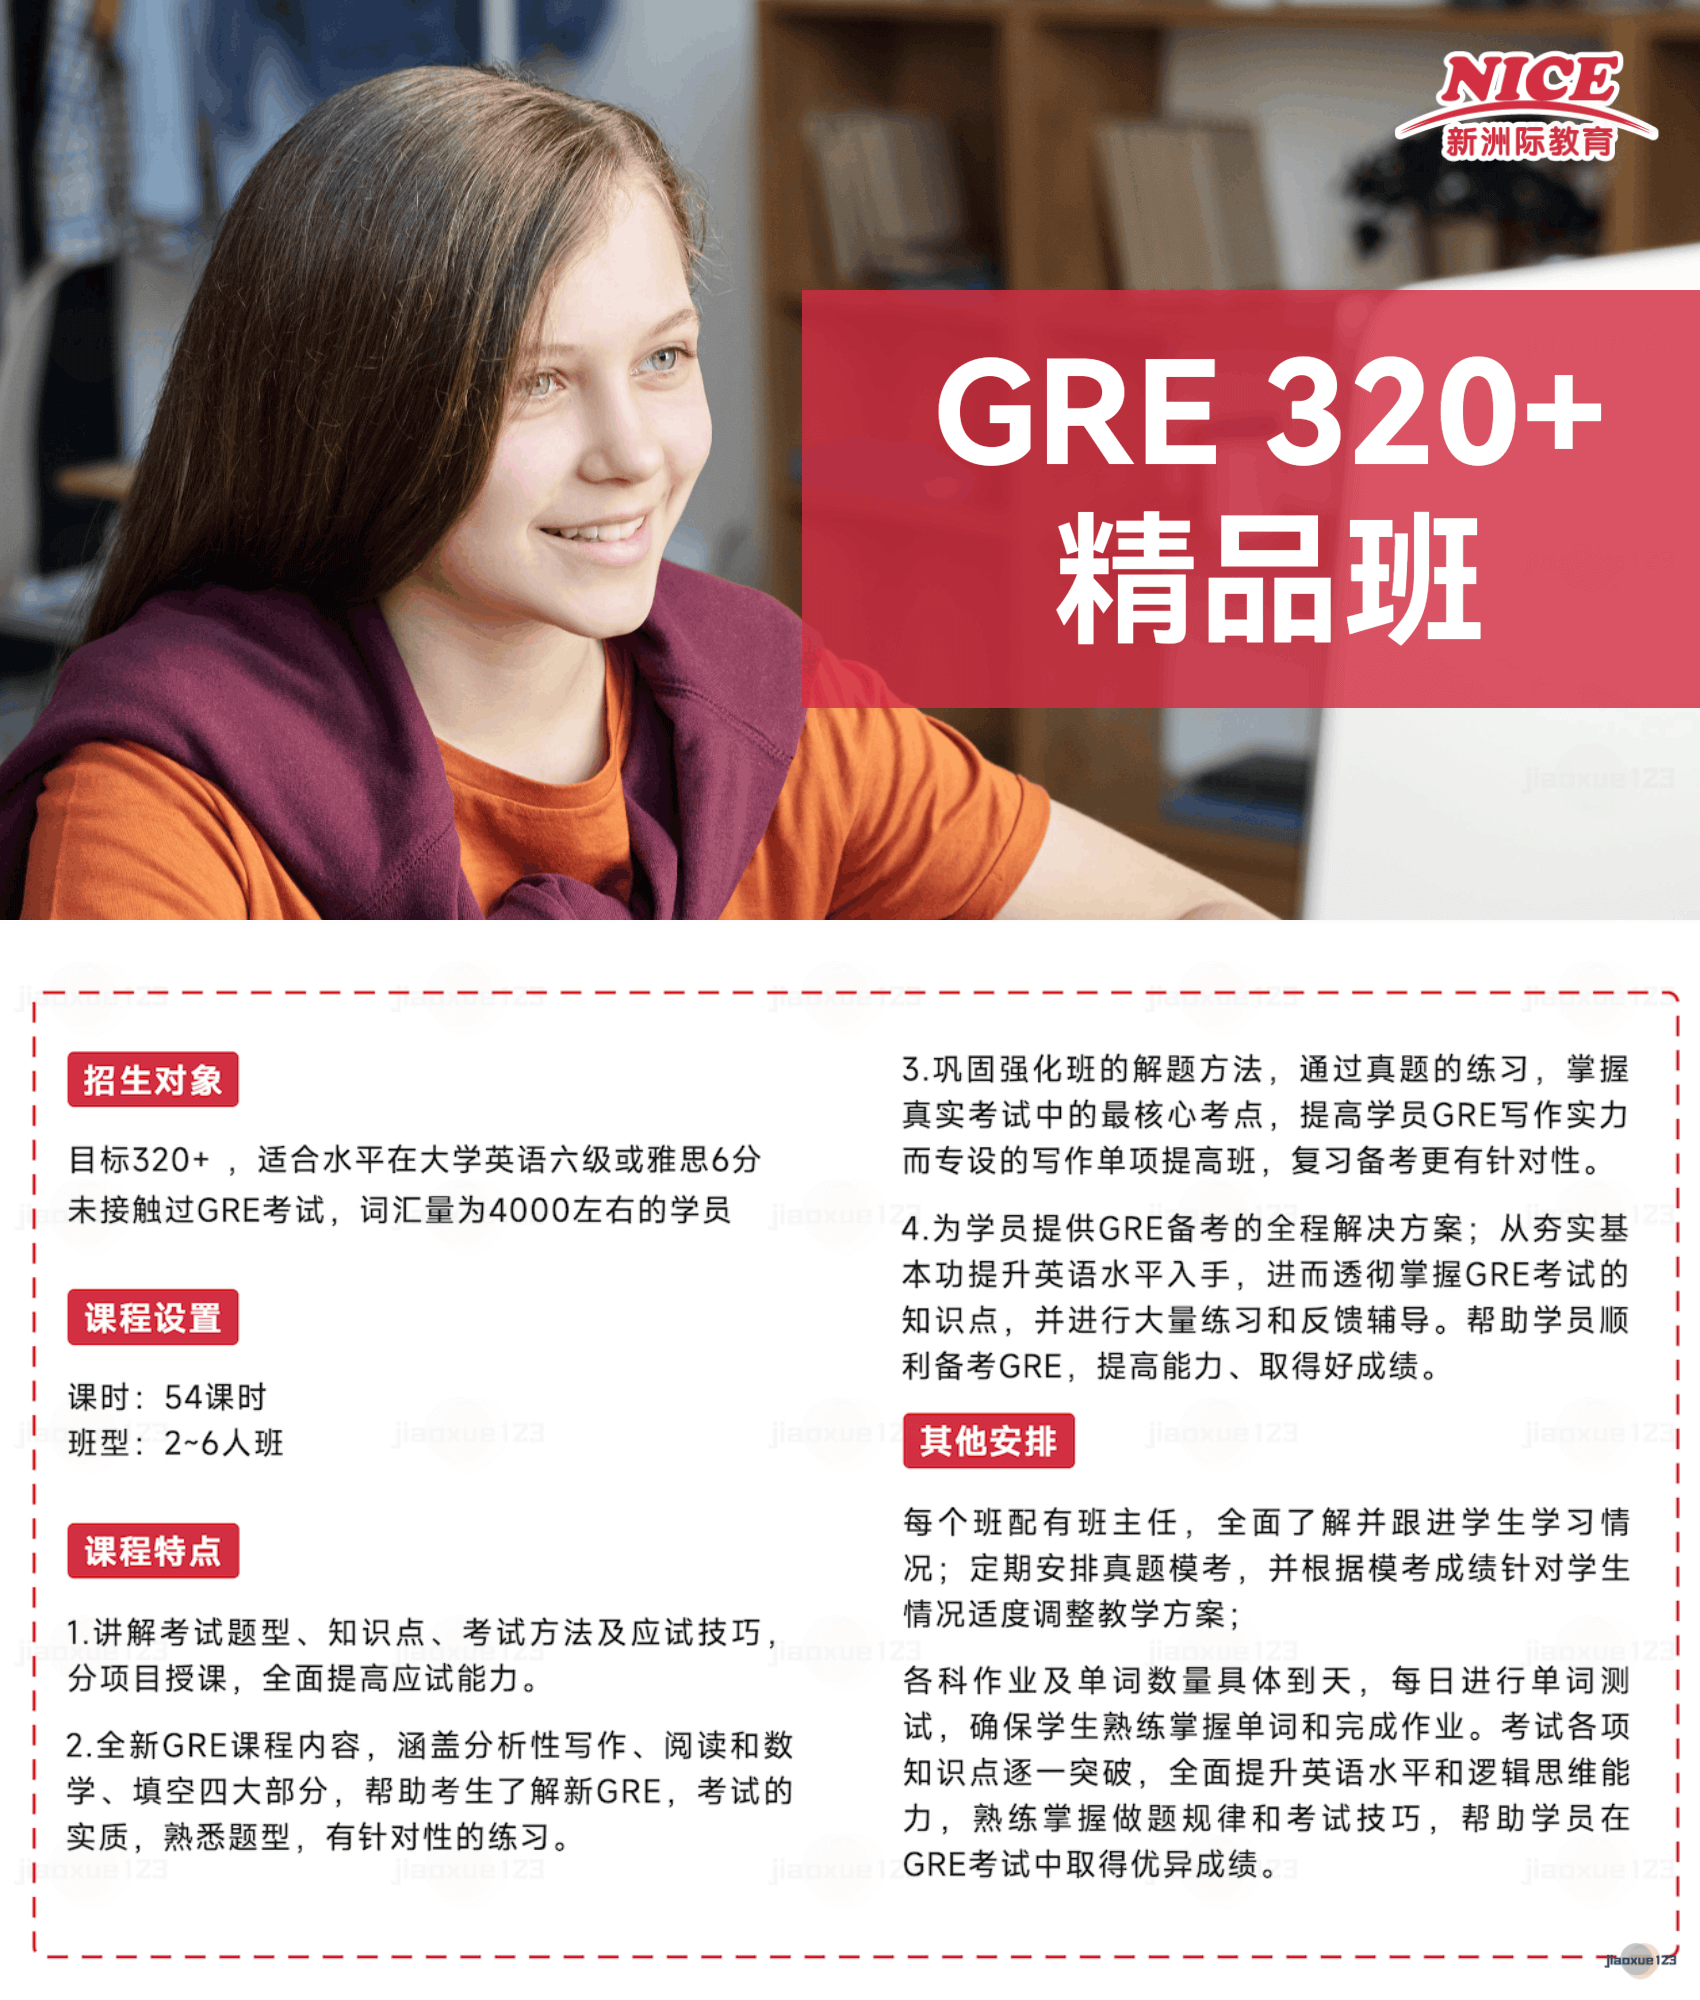 GRE 320+精品班-新洲际教育